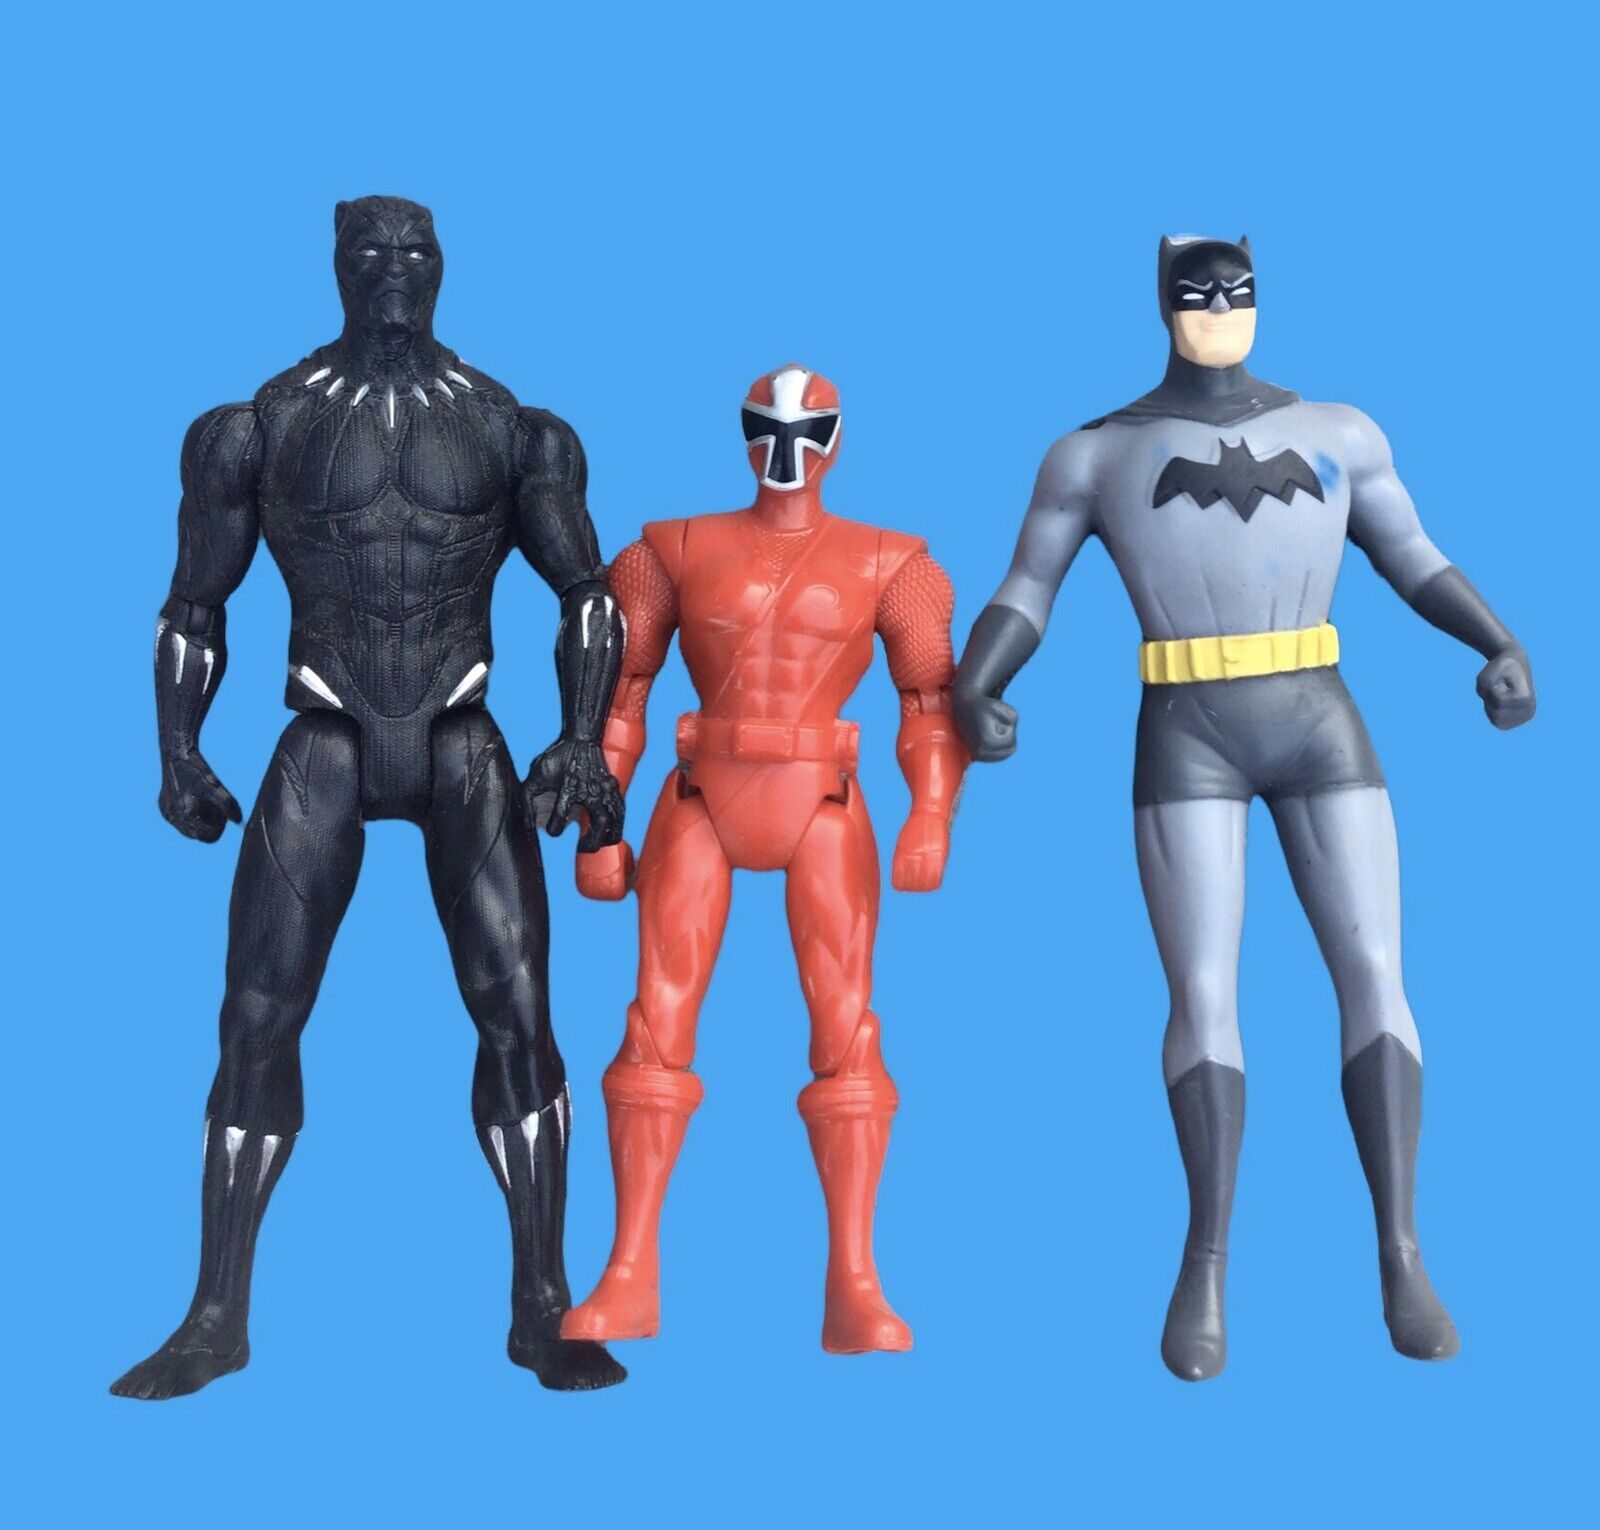 Bendable Batman Figure 5” Power Ranger Figure 5” And Advengers Black Panther 6”